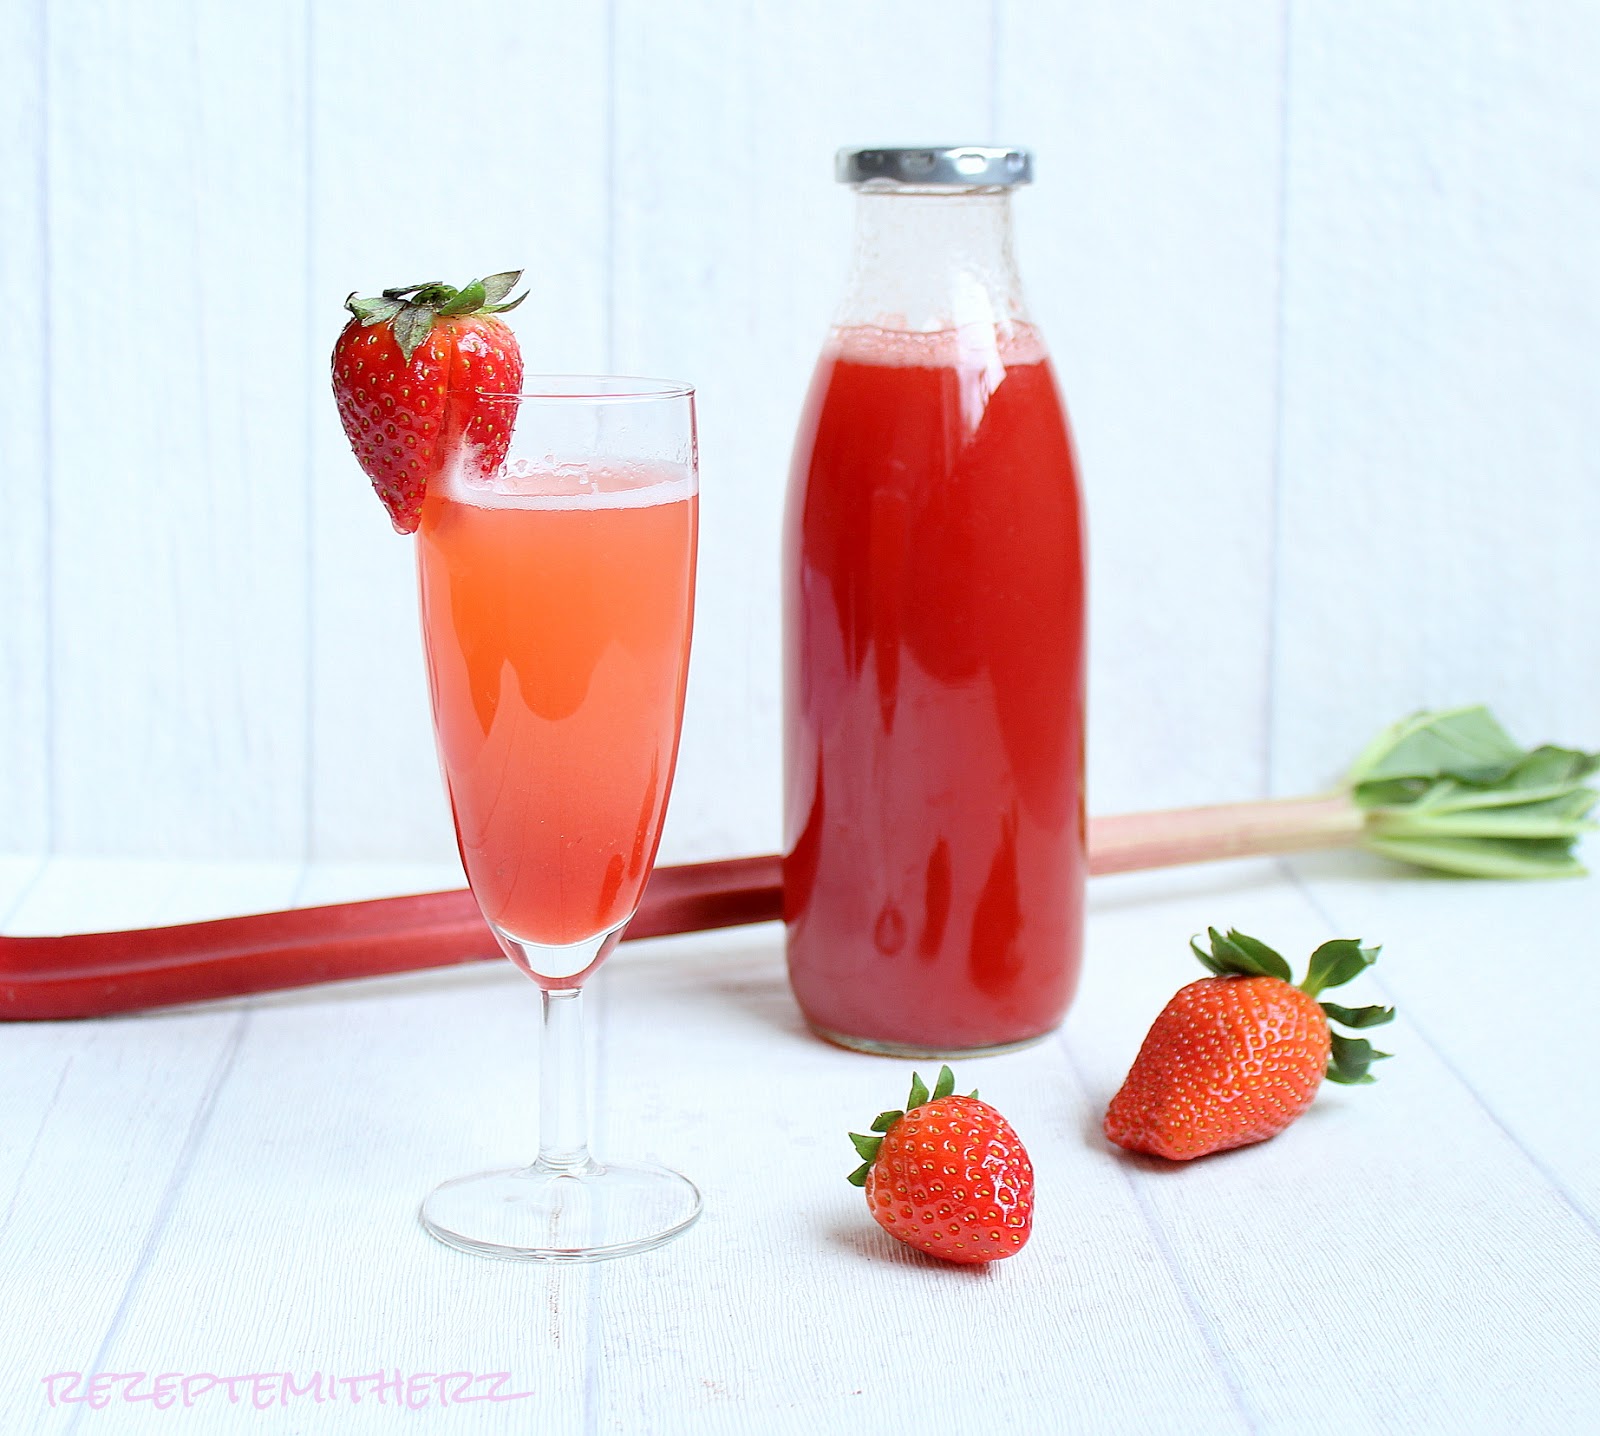 Rezepte mit Herz: Erdbeer - Rhabarber - Sirup